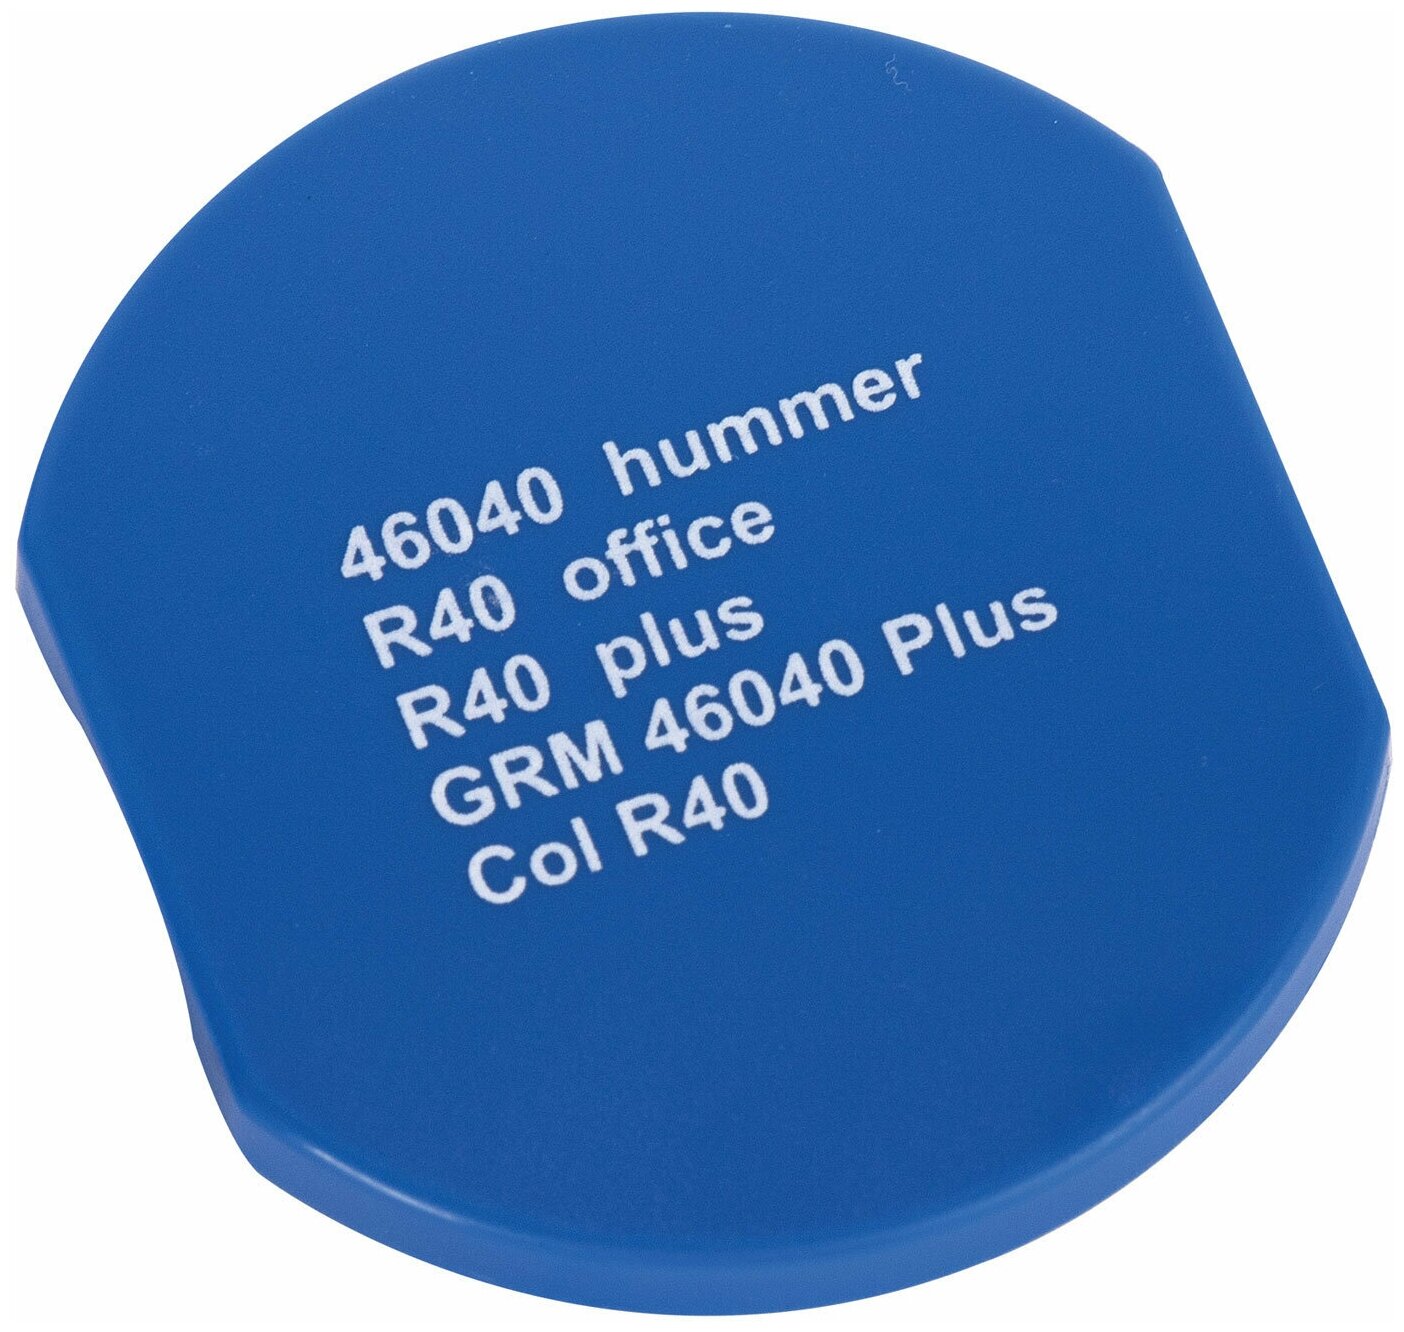 Подушка сменная диаметр 40 мм, синяя, для GRM R40Plus, 46040, Hummer, Colop Printer R40, 171000011